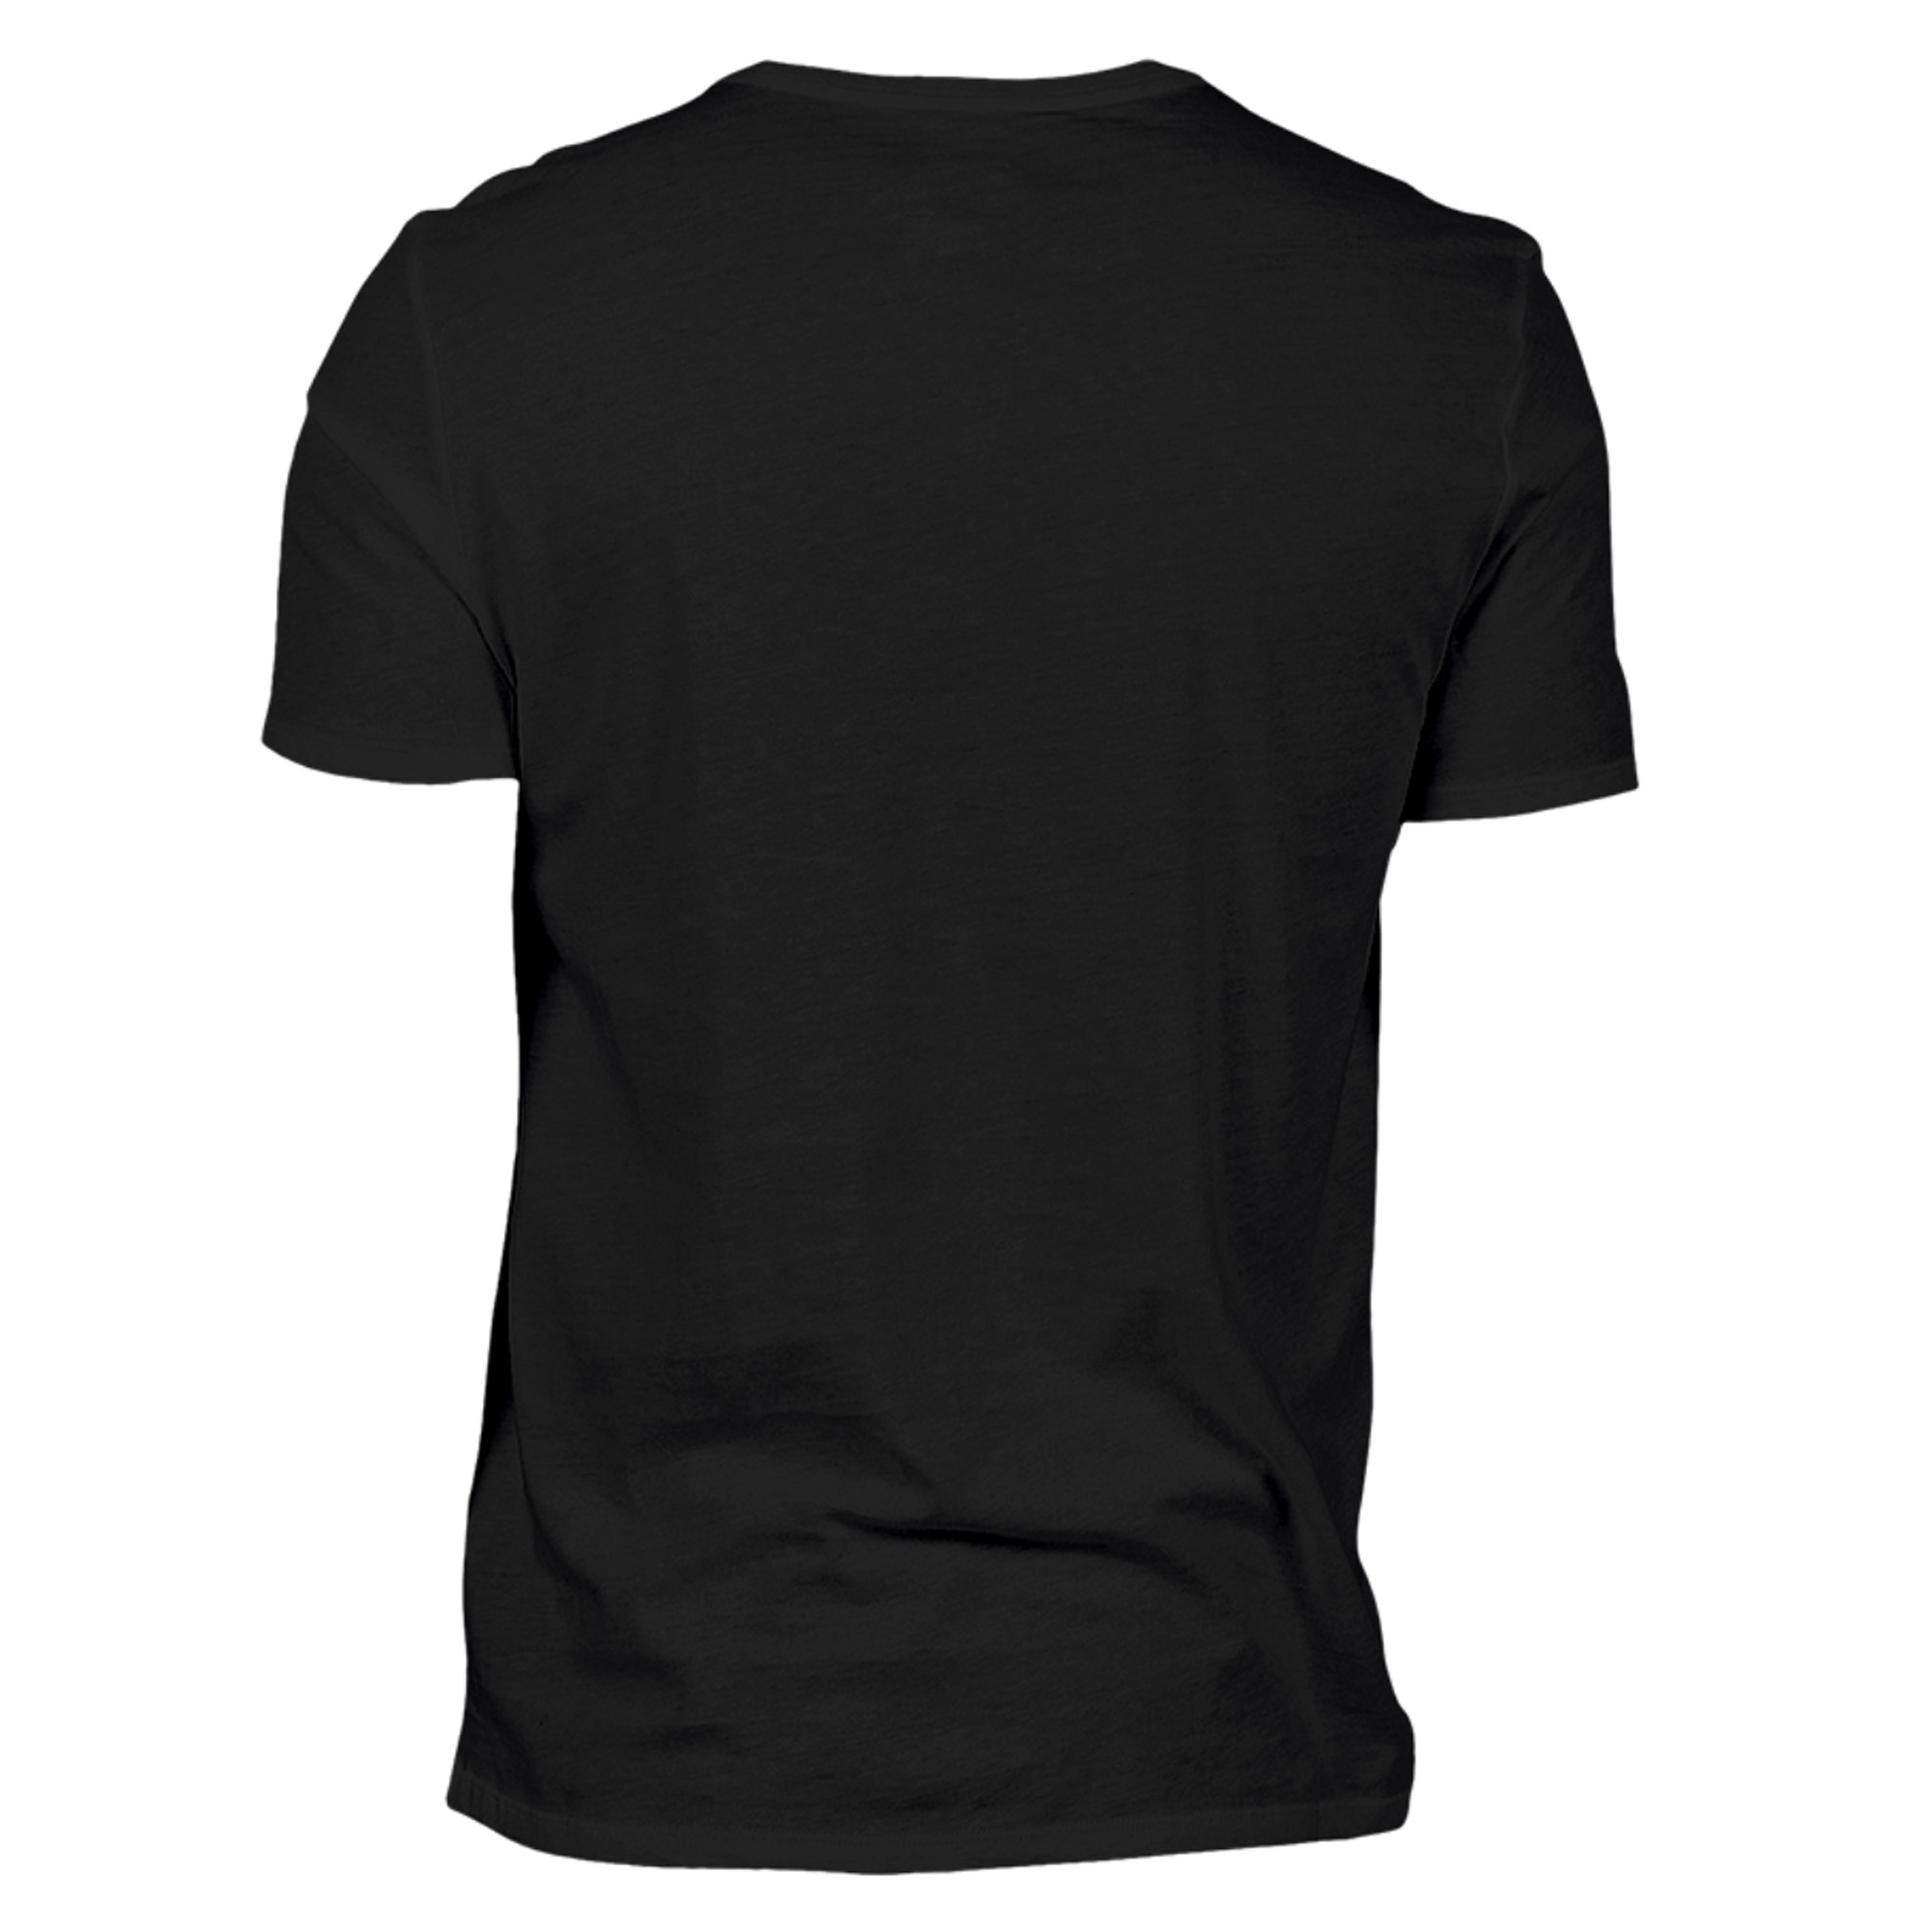 Rochau T-Shirt »Classic«